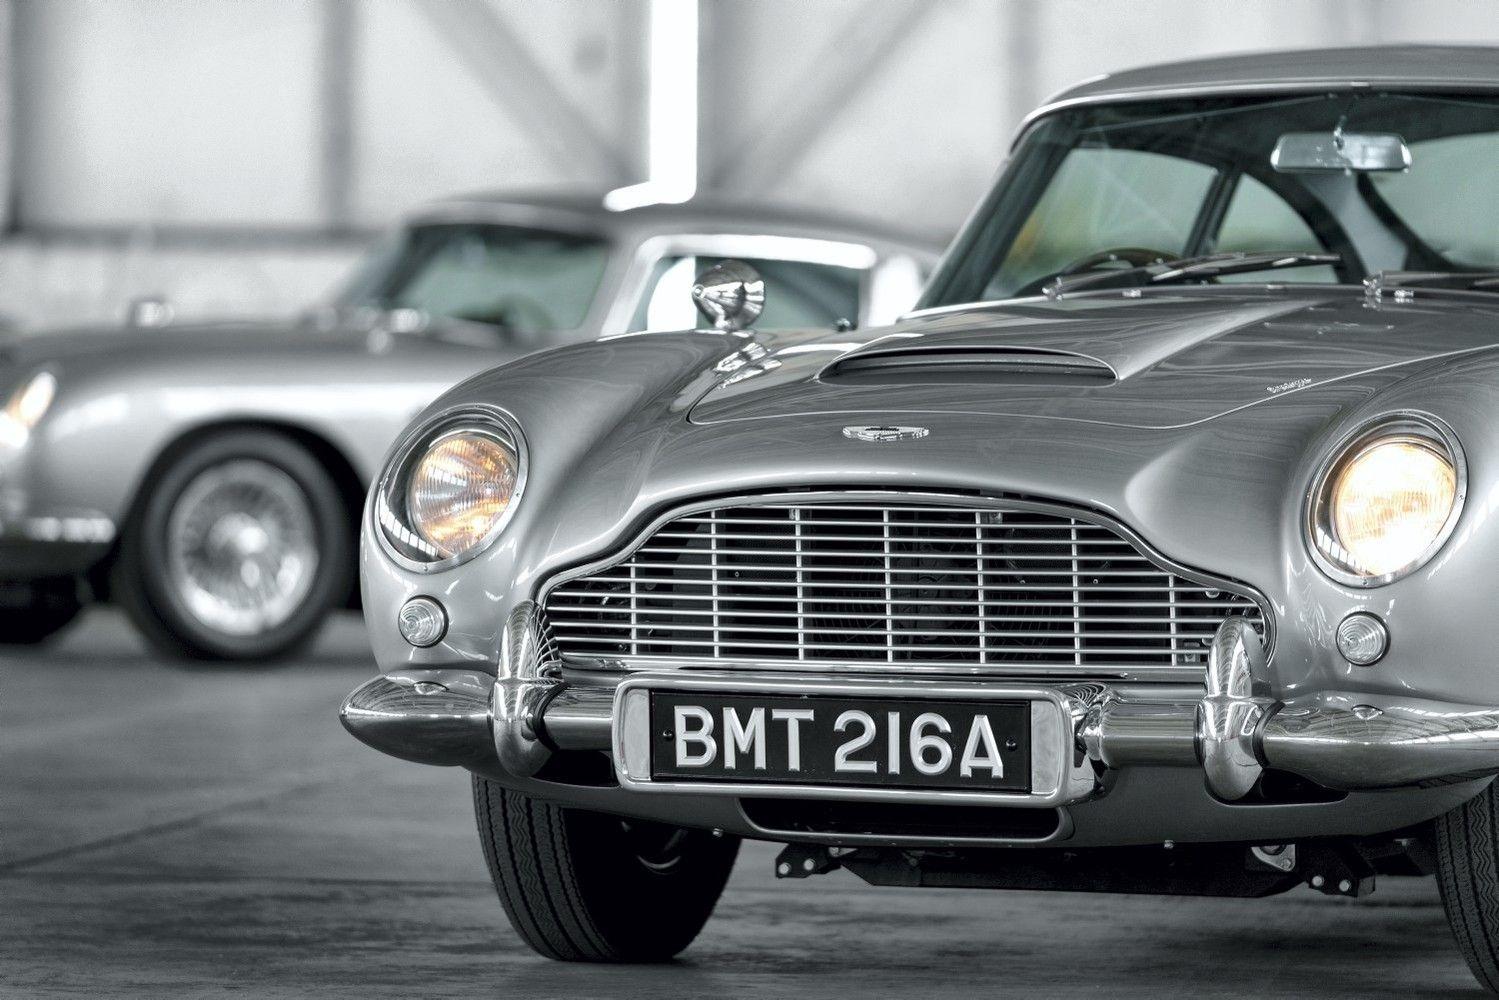 Explore the Iconic James Bond Aston Martin DB5 Today!